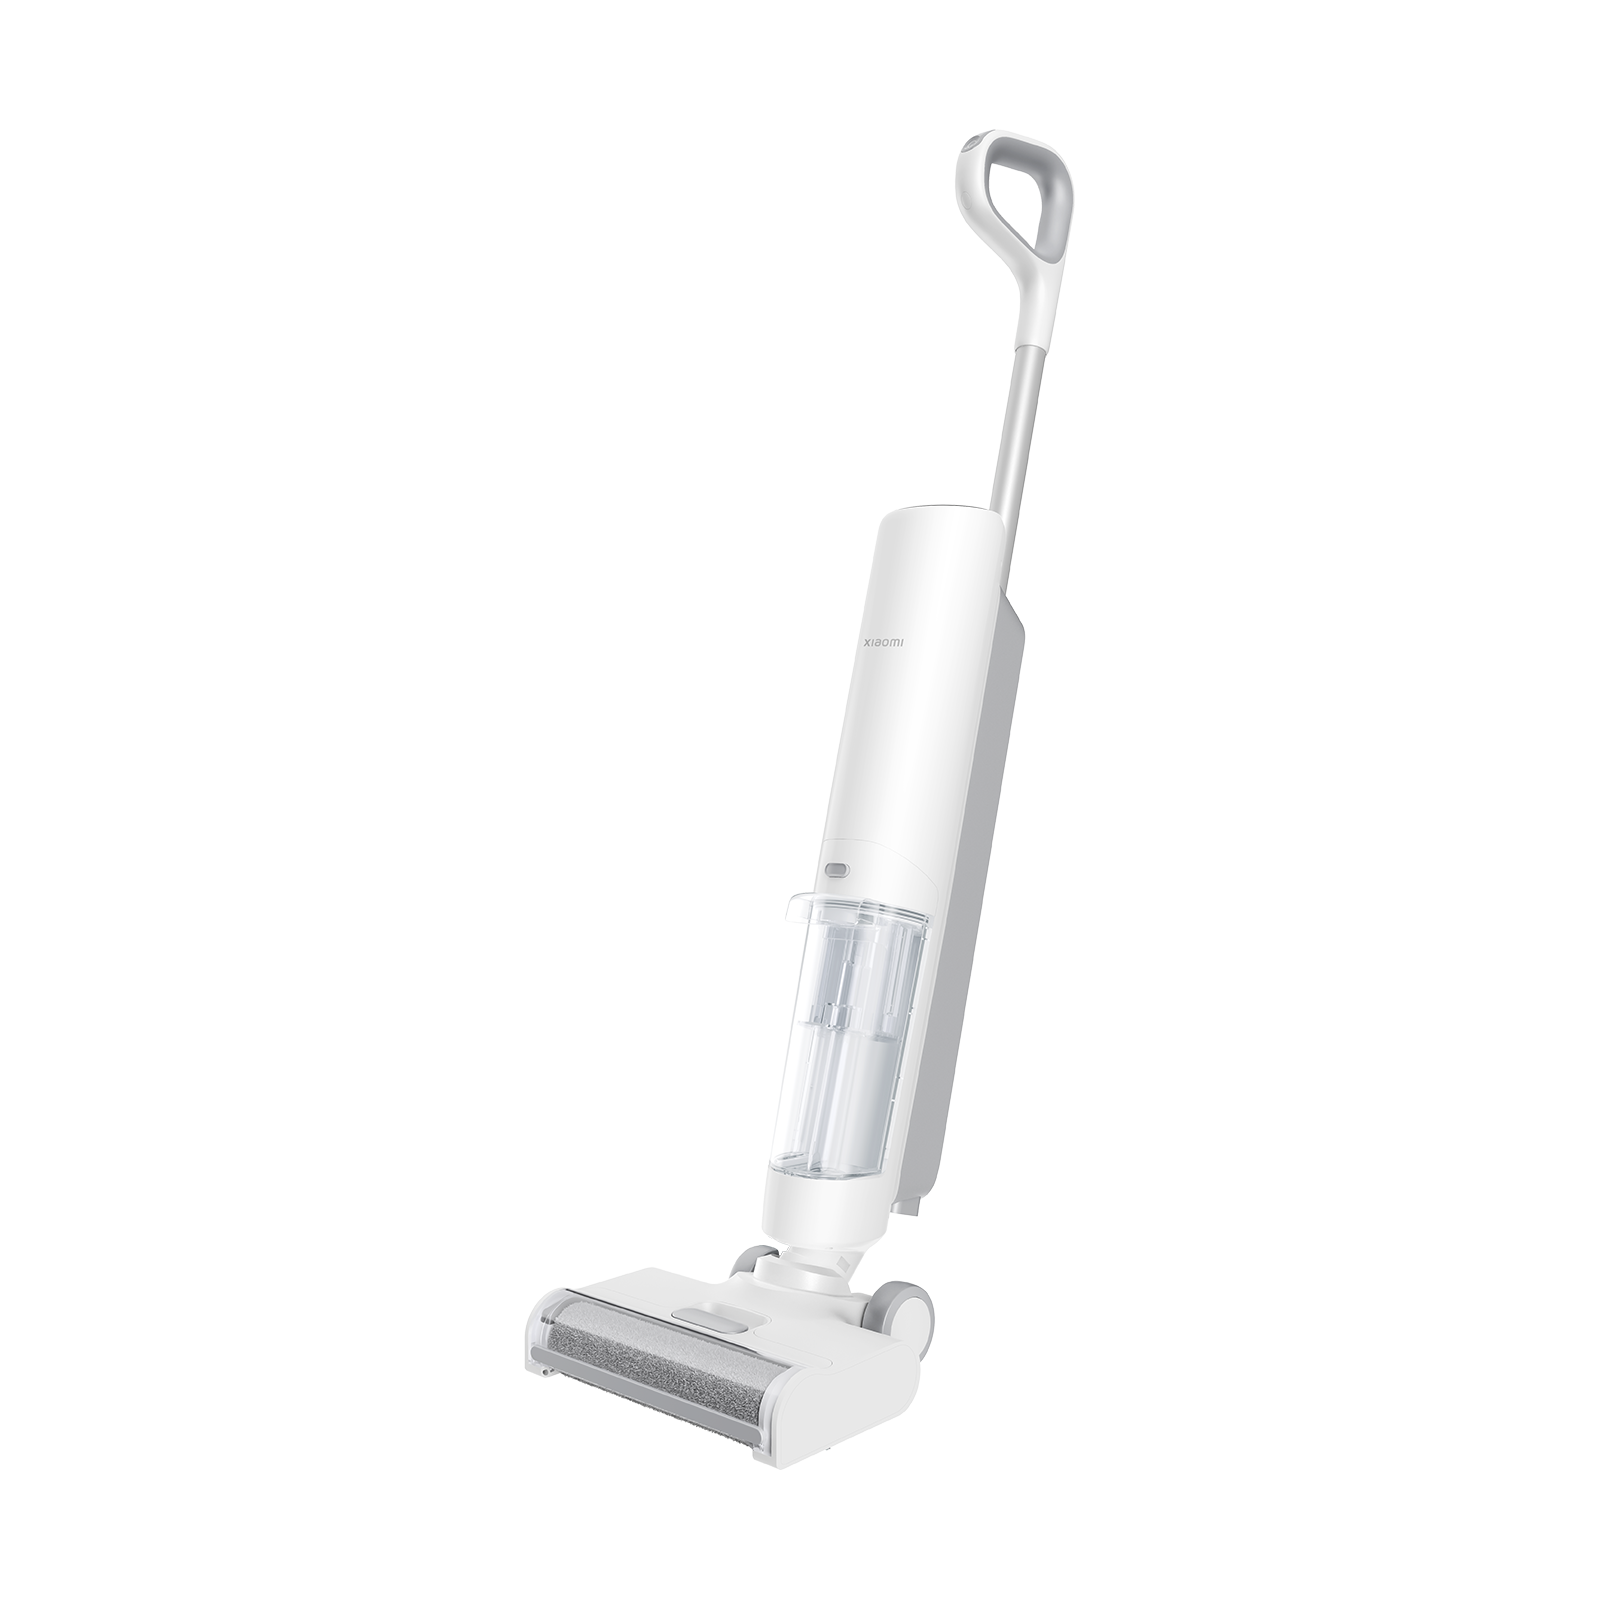 Xiaomi Truclean W10 Ultra Wet Dry Vacuum